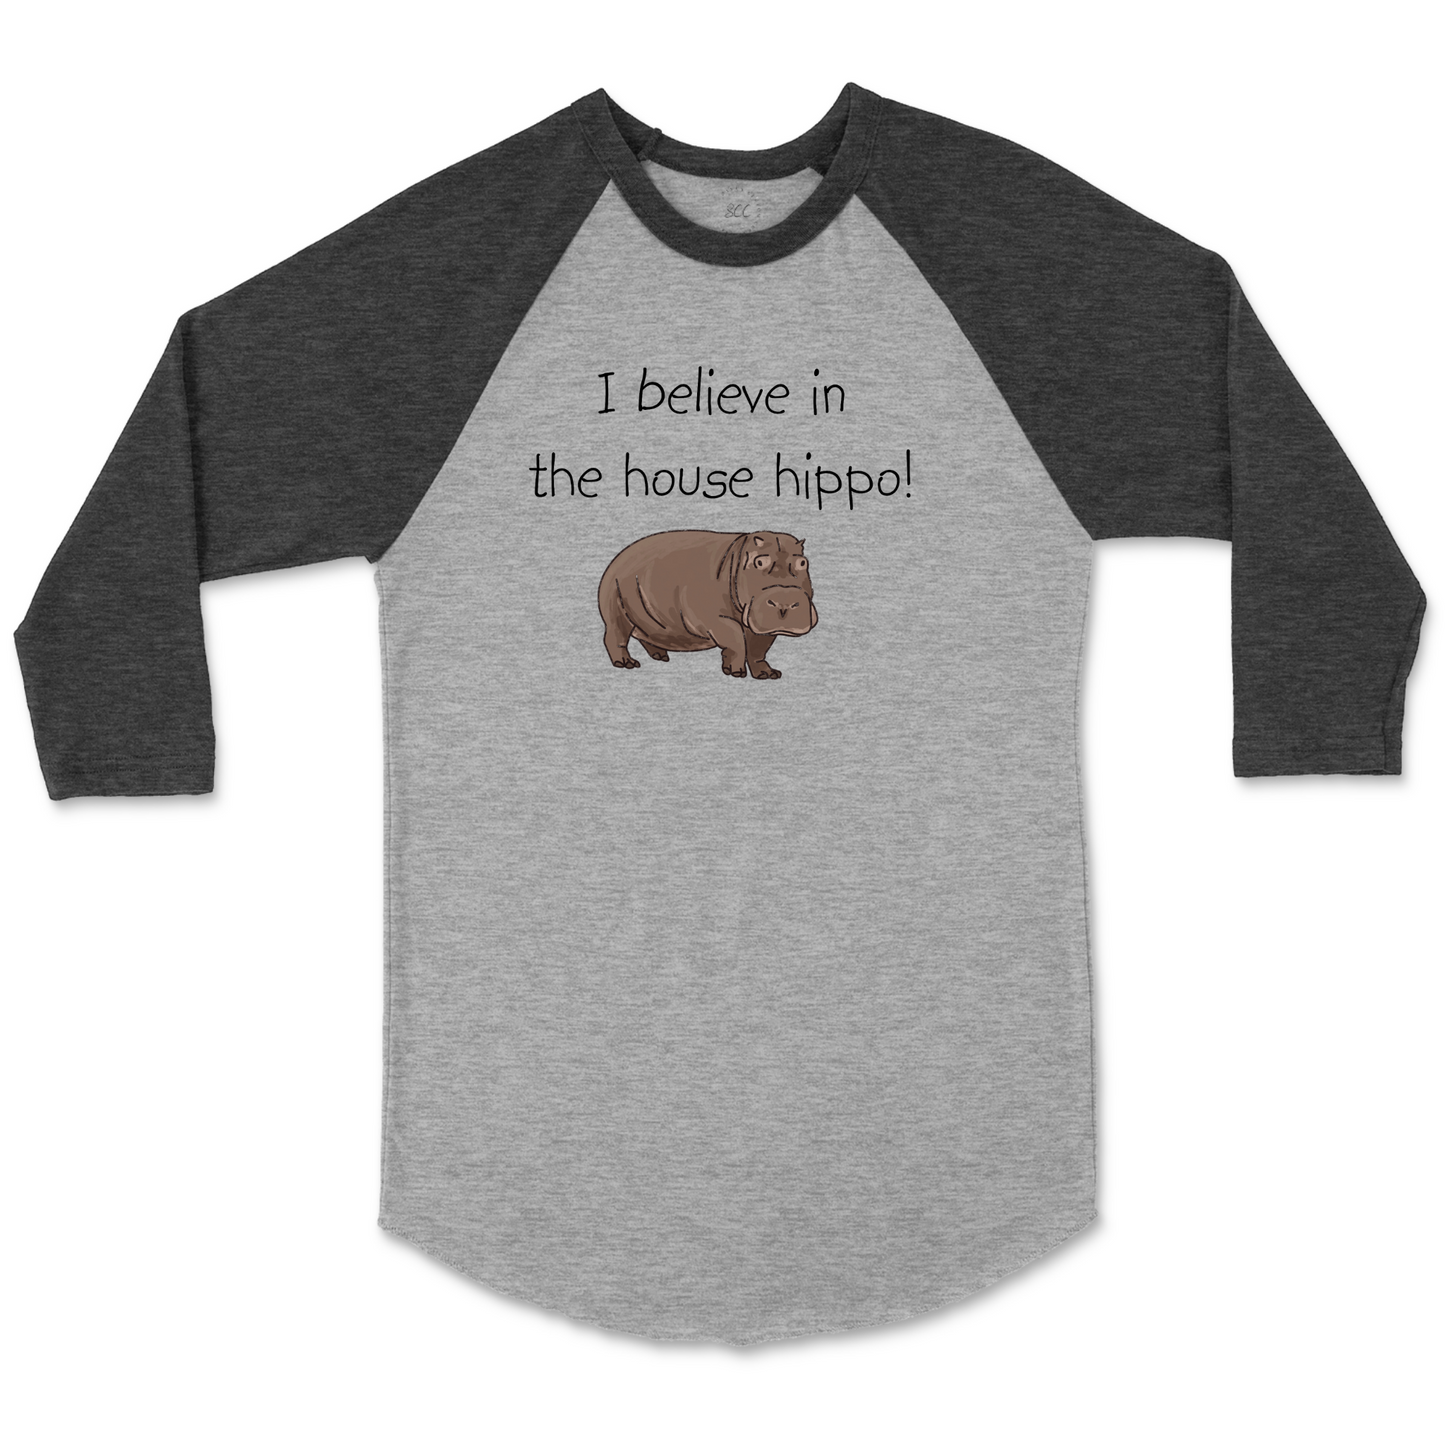 I BELIEVE IN THE HOUSE HIPPO! - Unisex Raglan Baseball T-Shirt